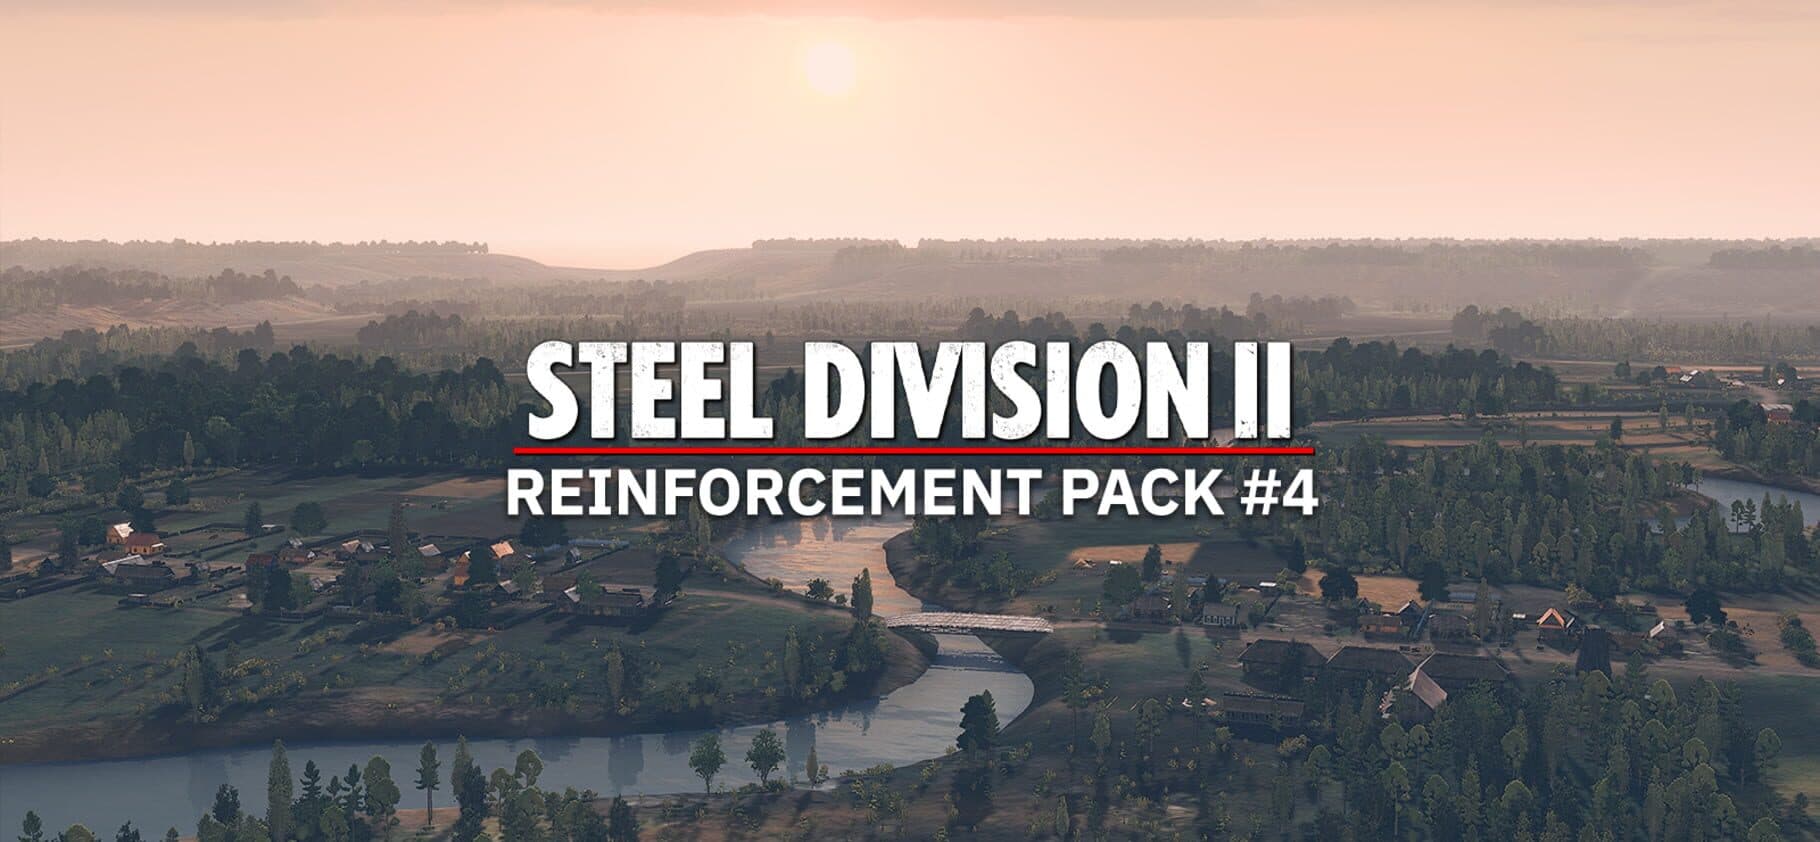 Steel Division 2: Reinforcement Pack #4 Image